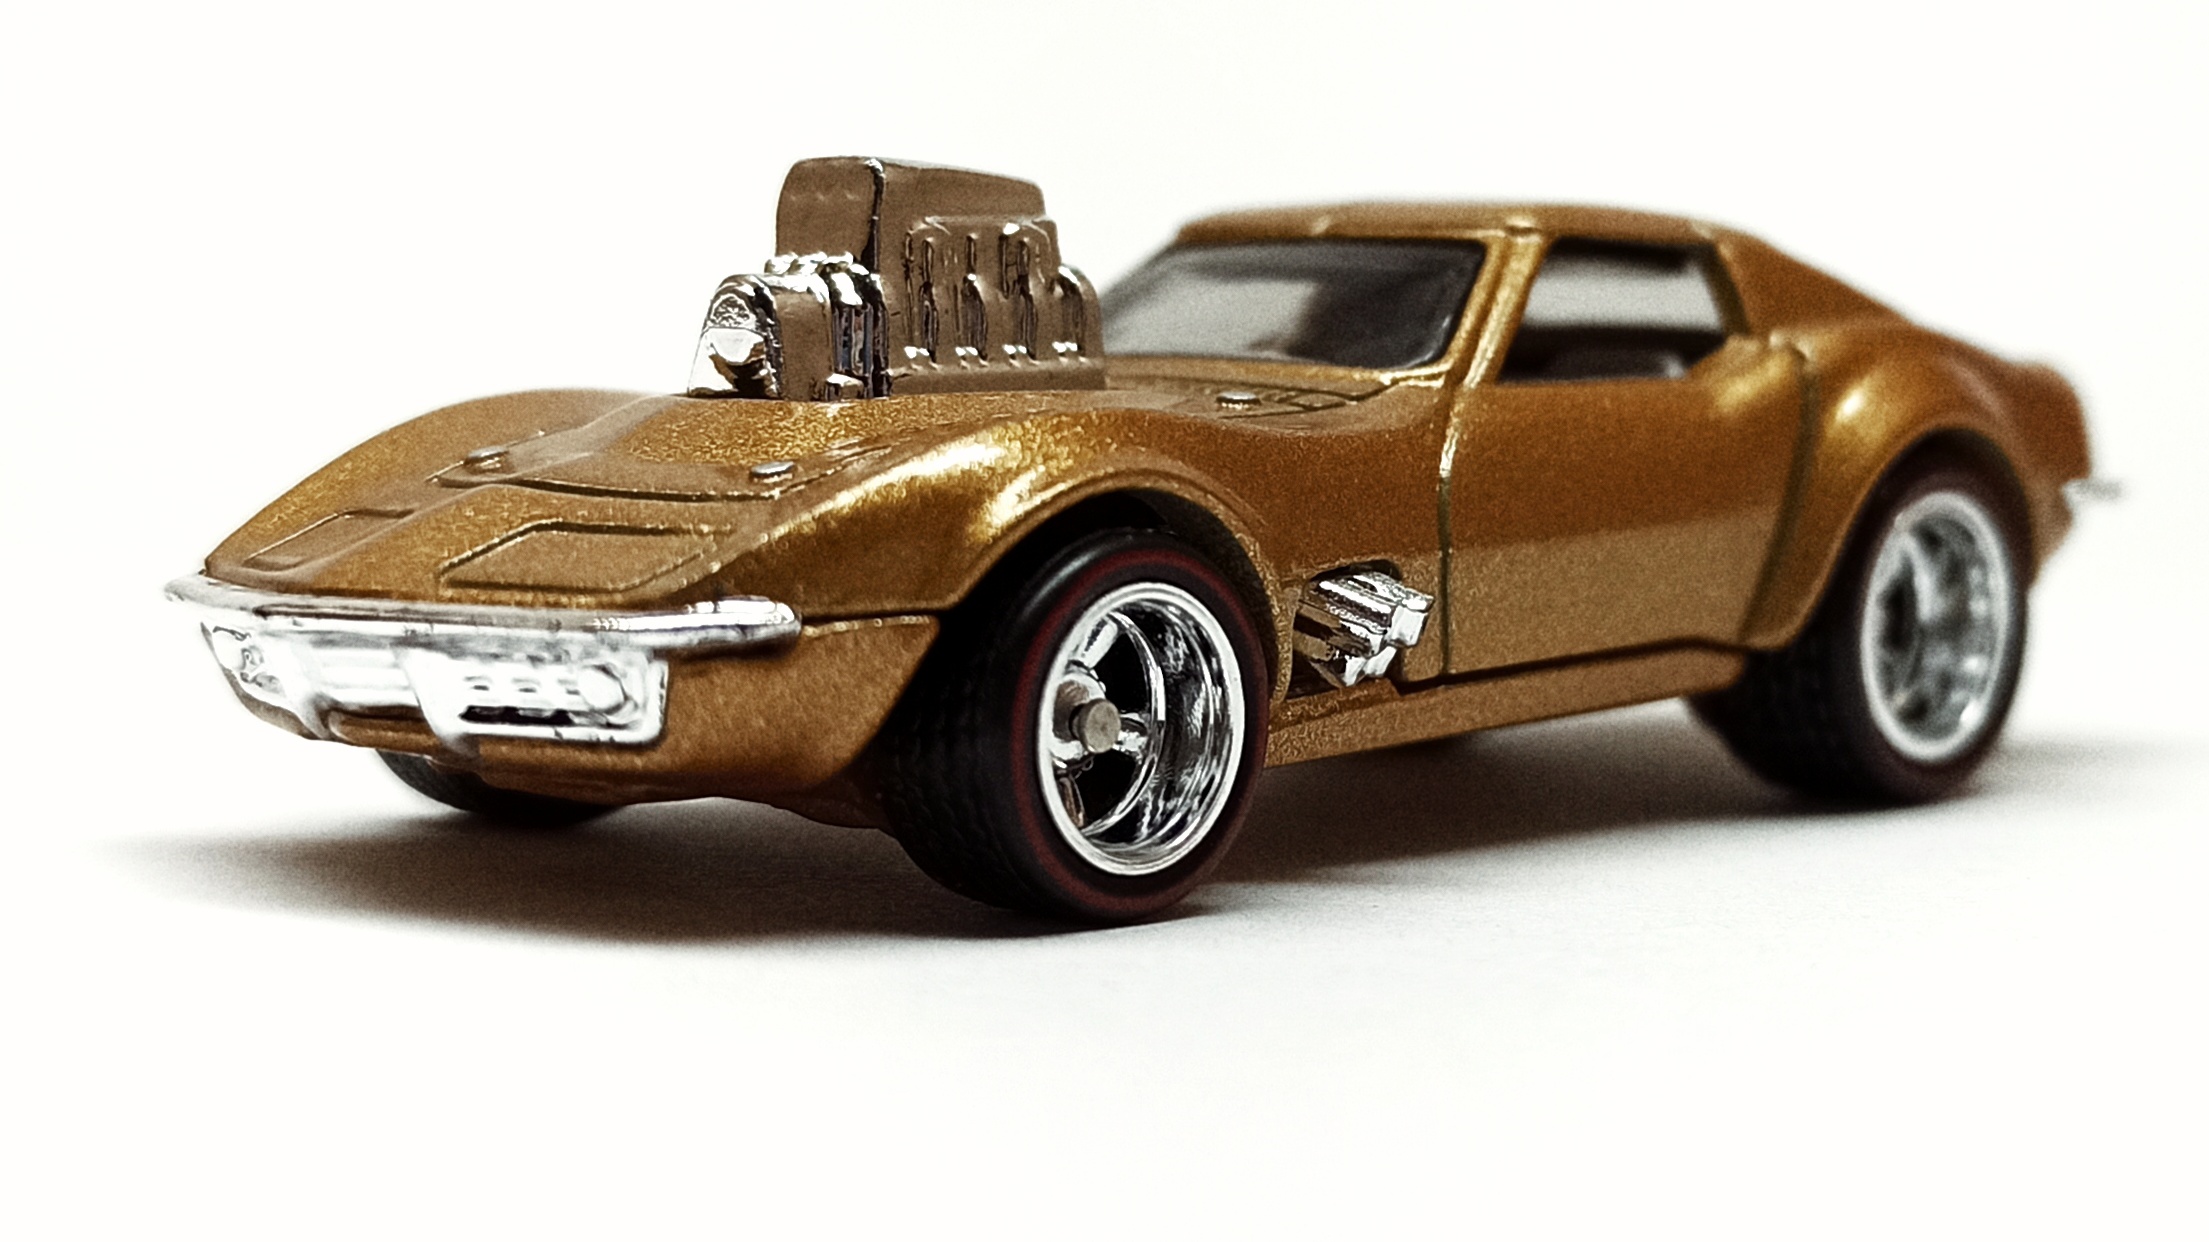 Hot Wheels '68 Corvette - Gas Monkey Garage (FLD15) 2018 Replica Entertainment metalflake gold